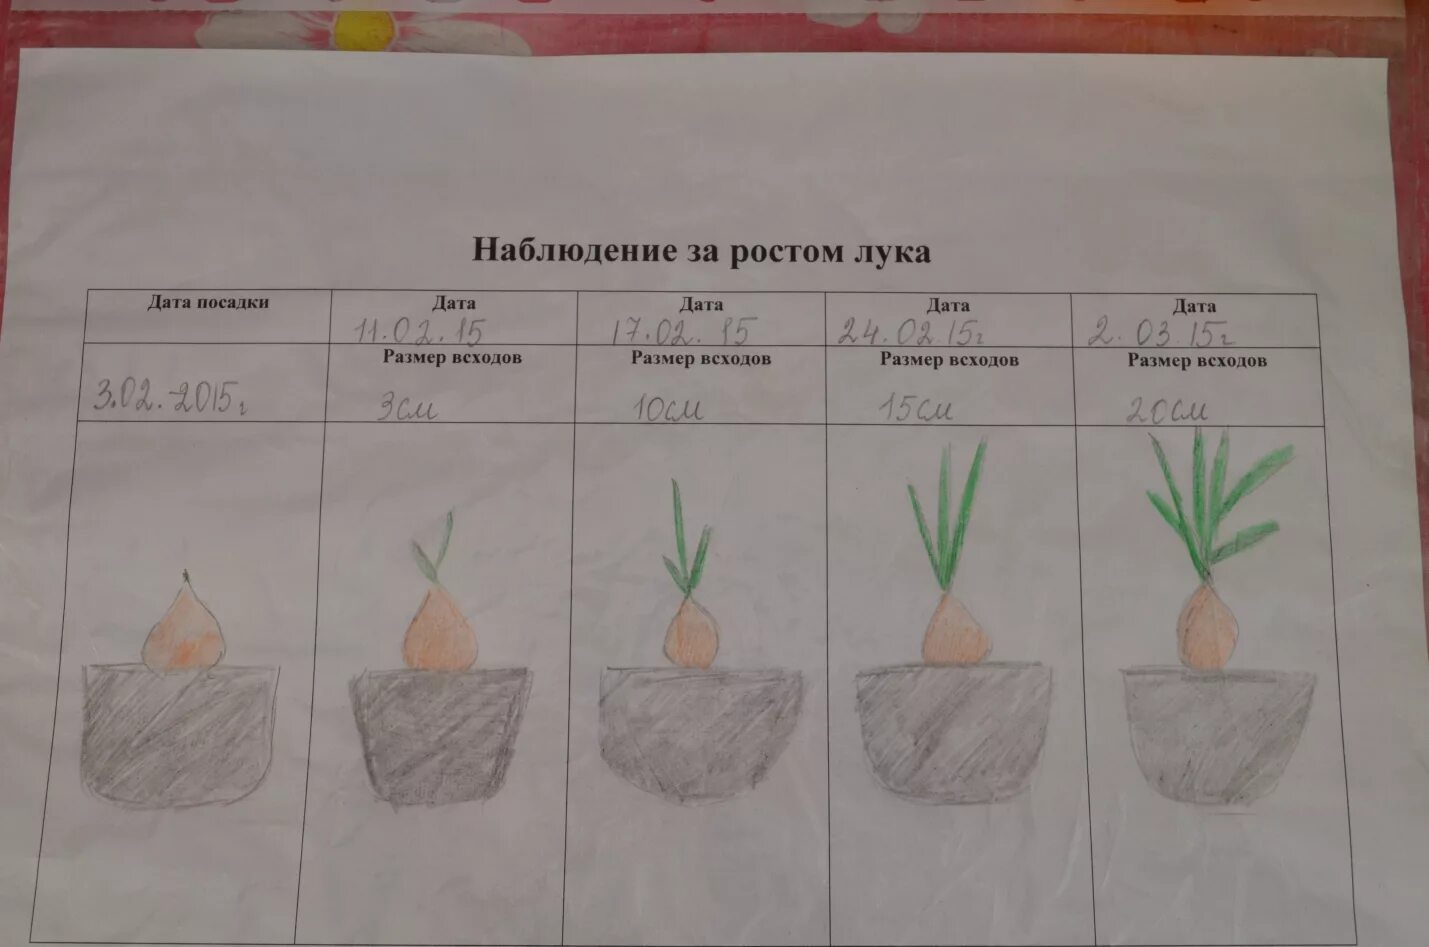 Наблюдение за растением 6 класс биология